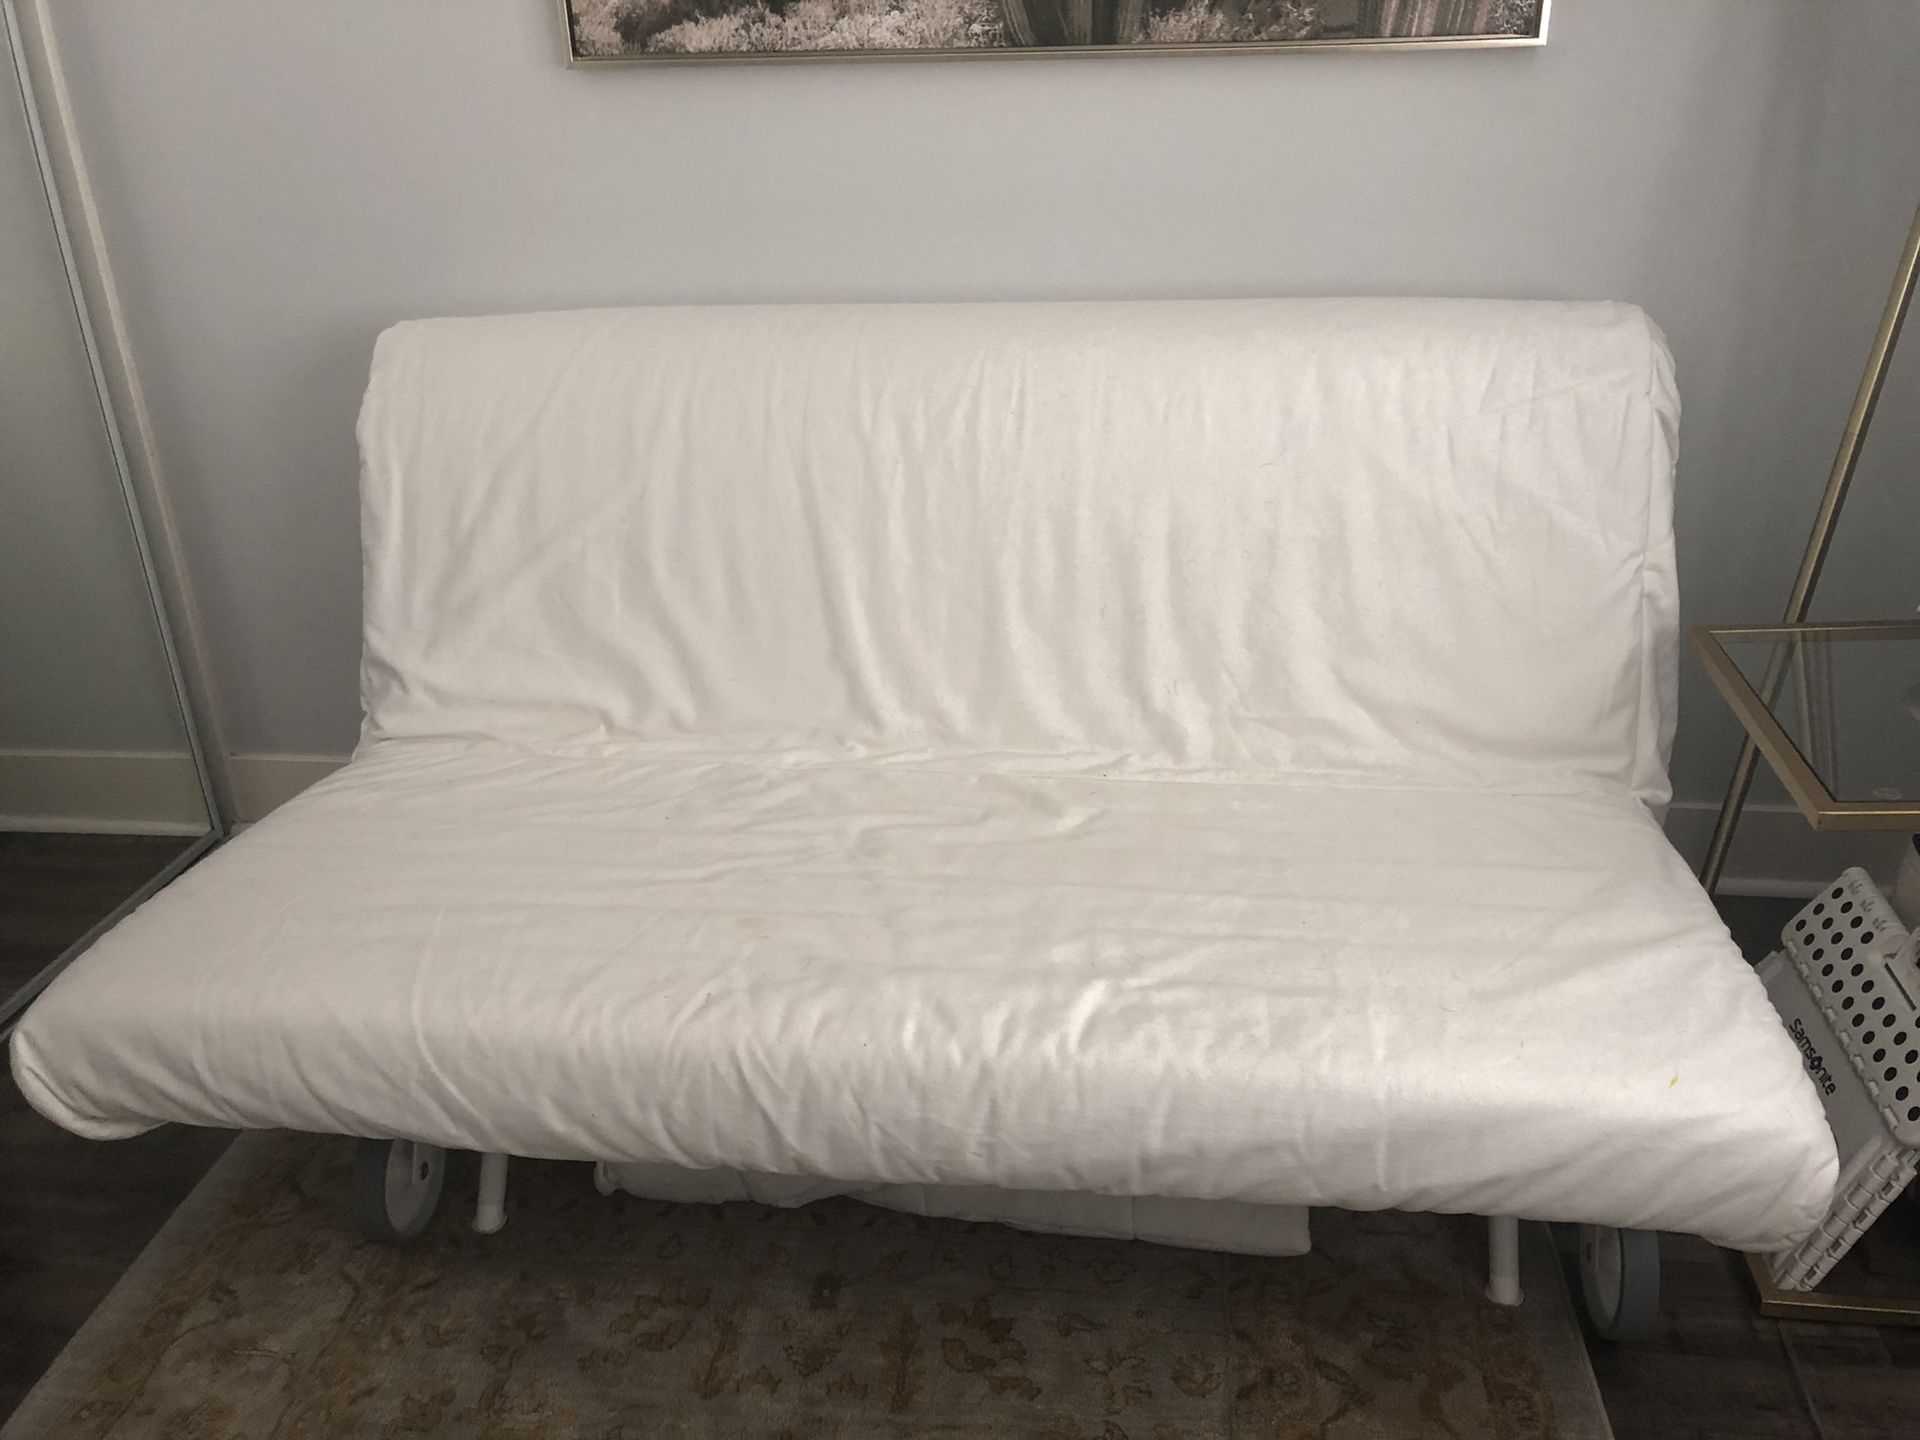 IKEA PS futon sleeper sofa for Sale in Diego, CA -